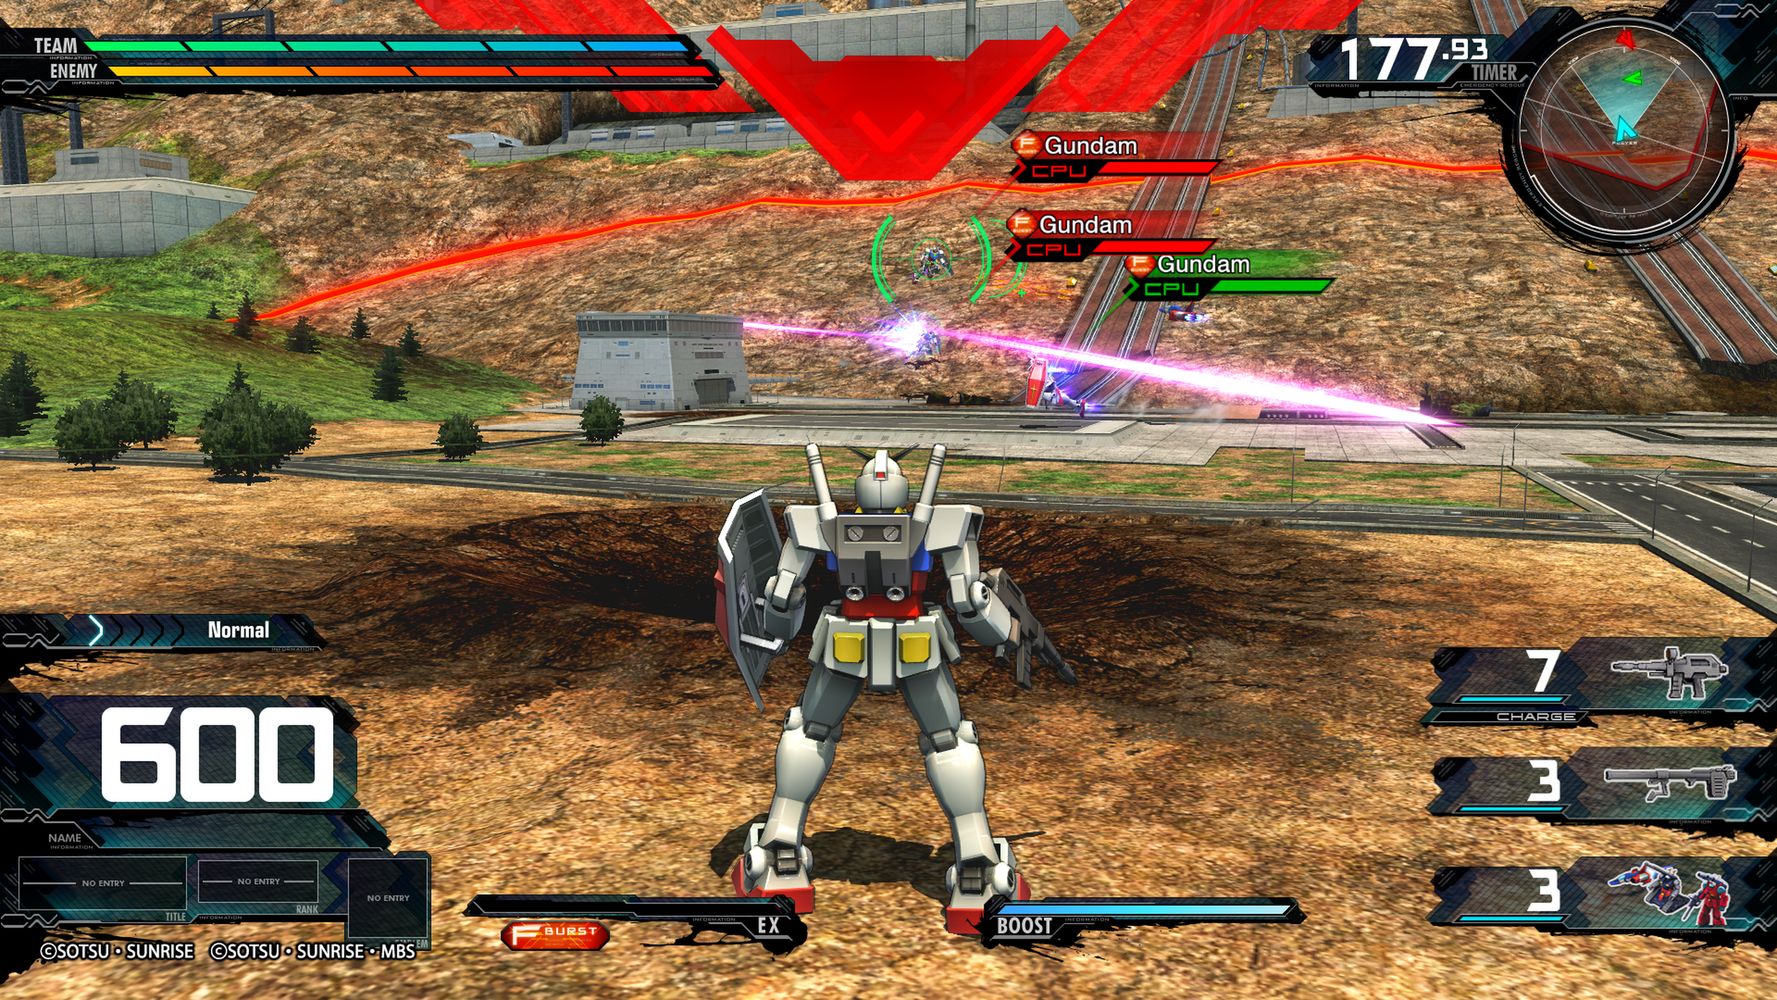 RX-78-2 Gundam / Mobile Suit Gundam EXTREME VS. MAXIBOOST ON